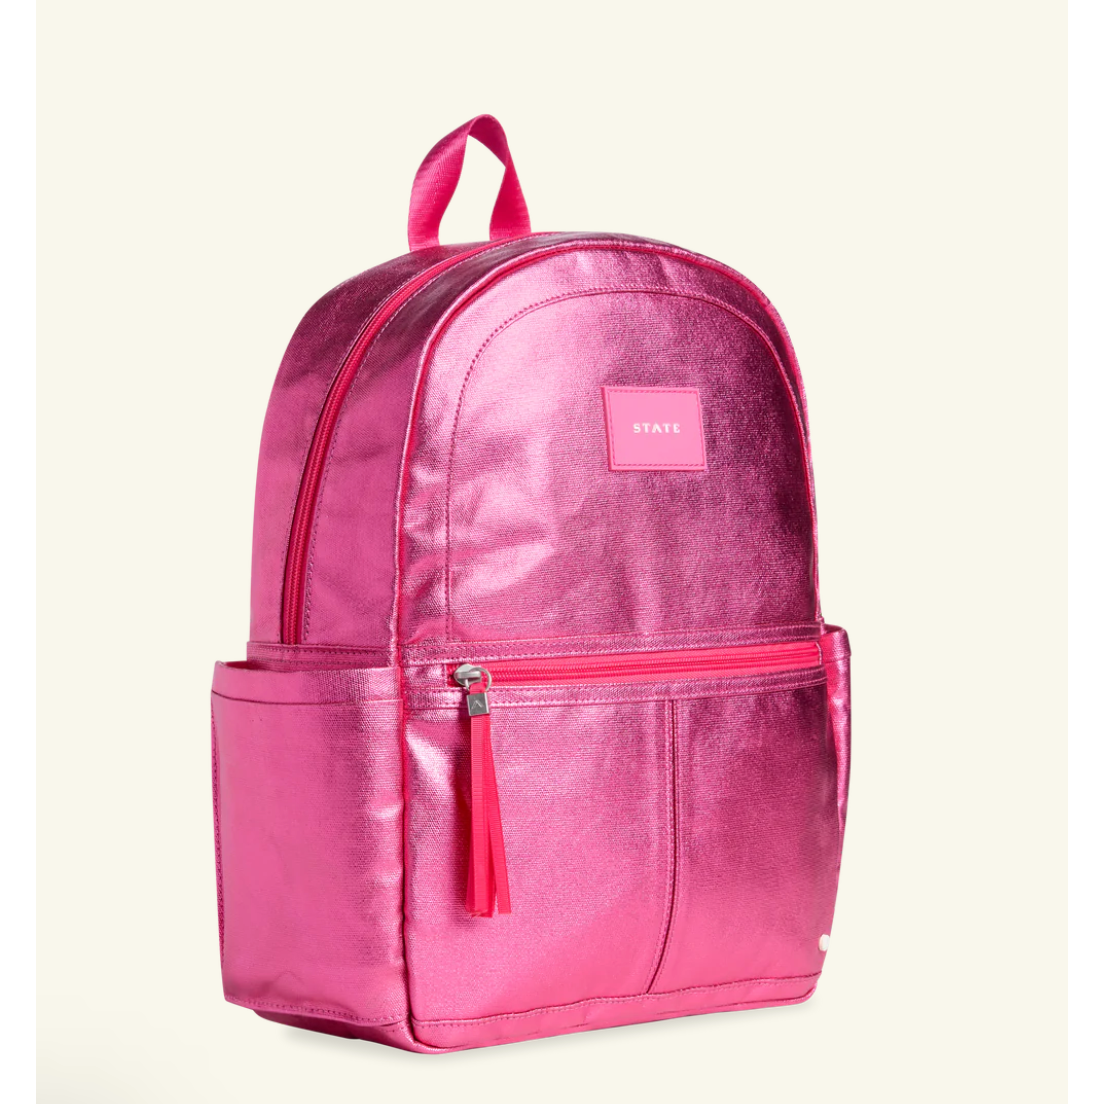 kane kids backpack | hot pink multi